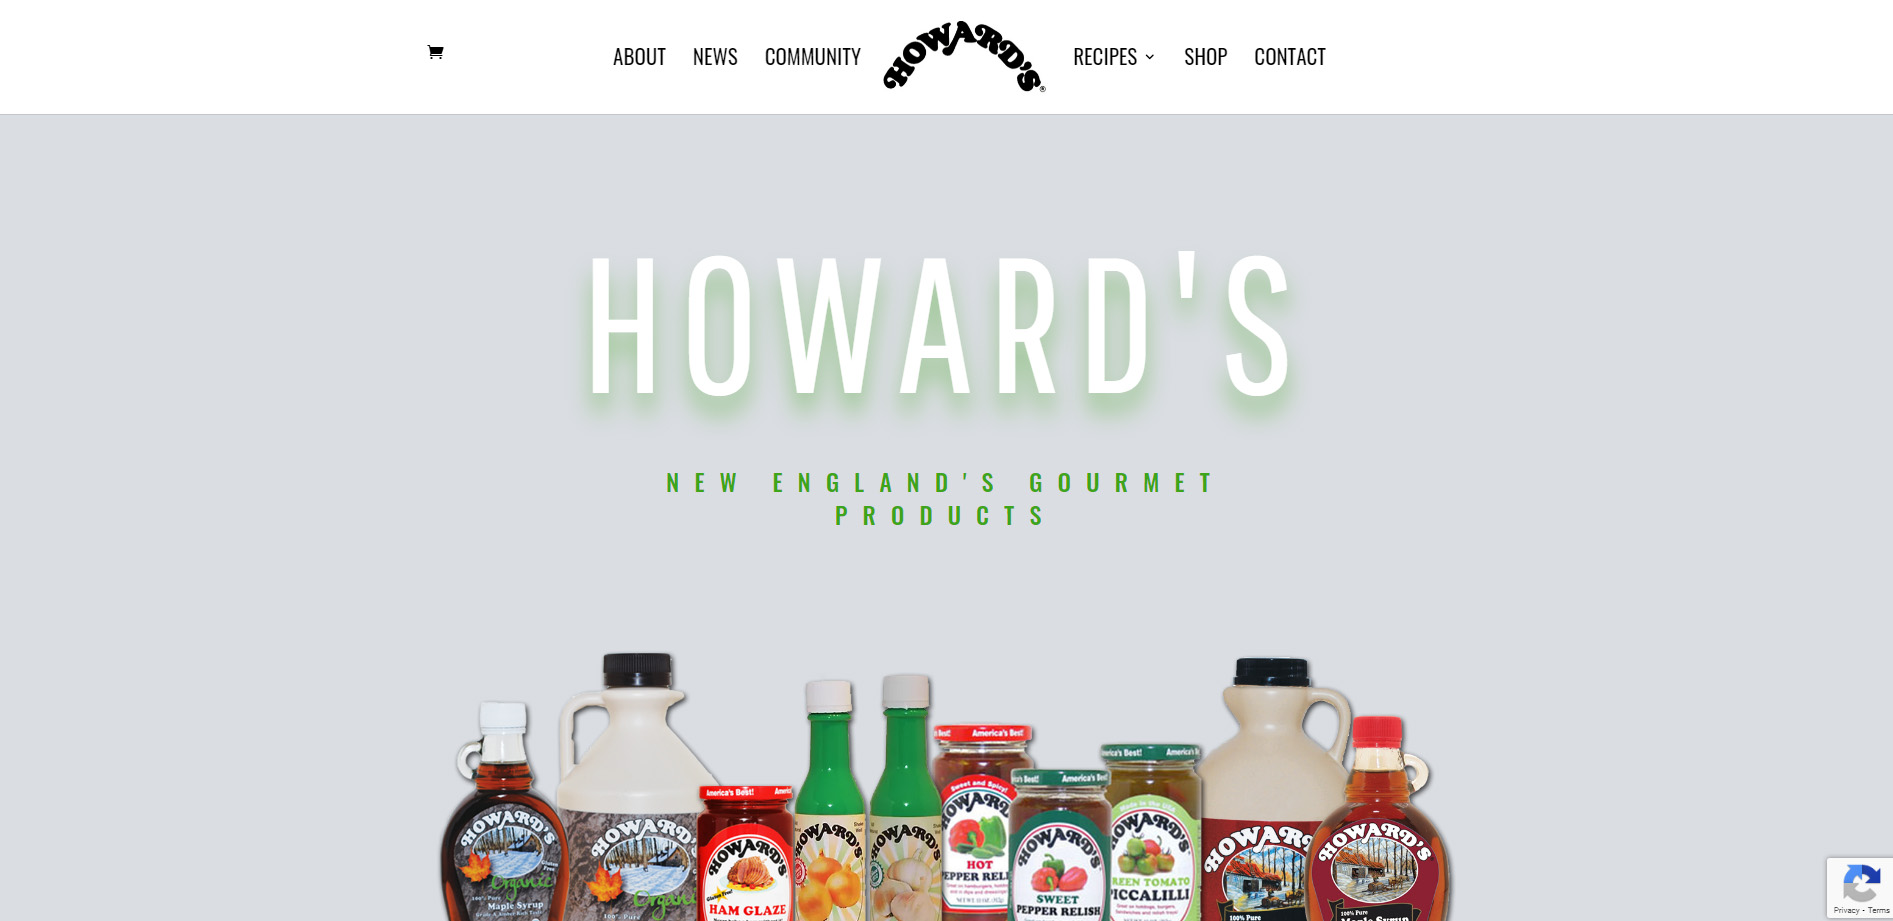 Howards Foods